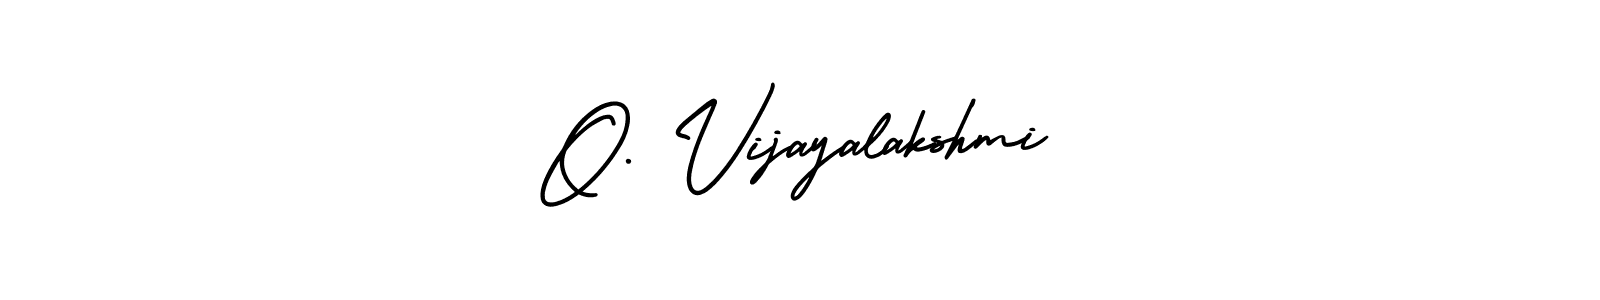 73+ O. Vijayalakshmi Name Signature Style Ideas | Wonderful eSignature